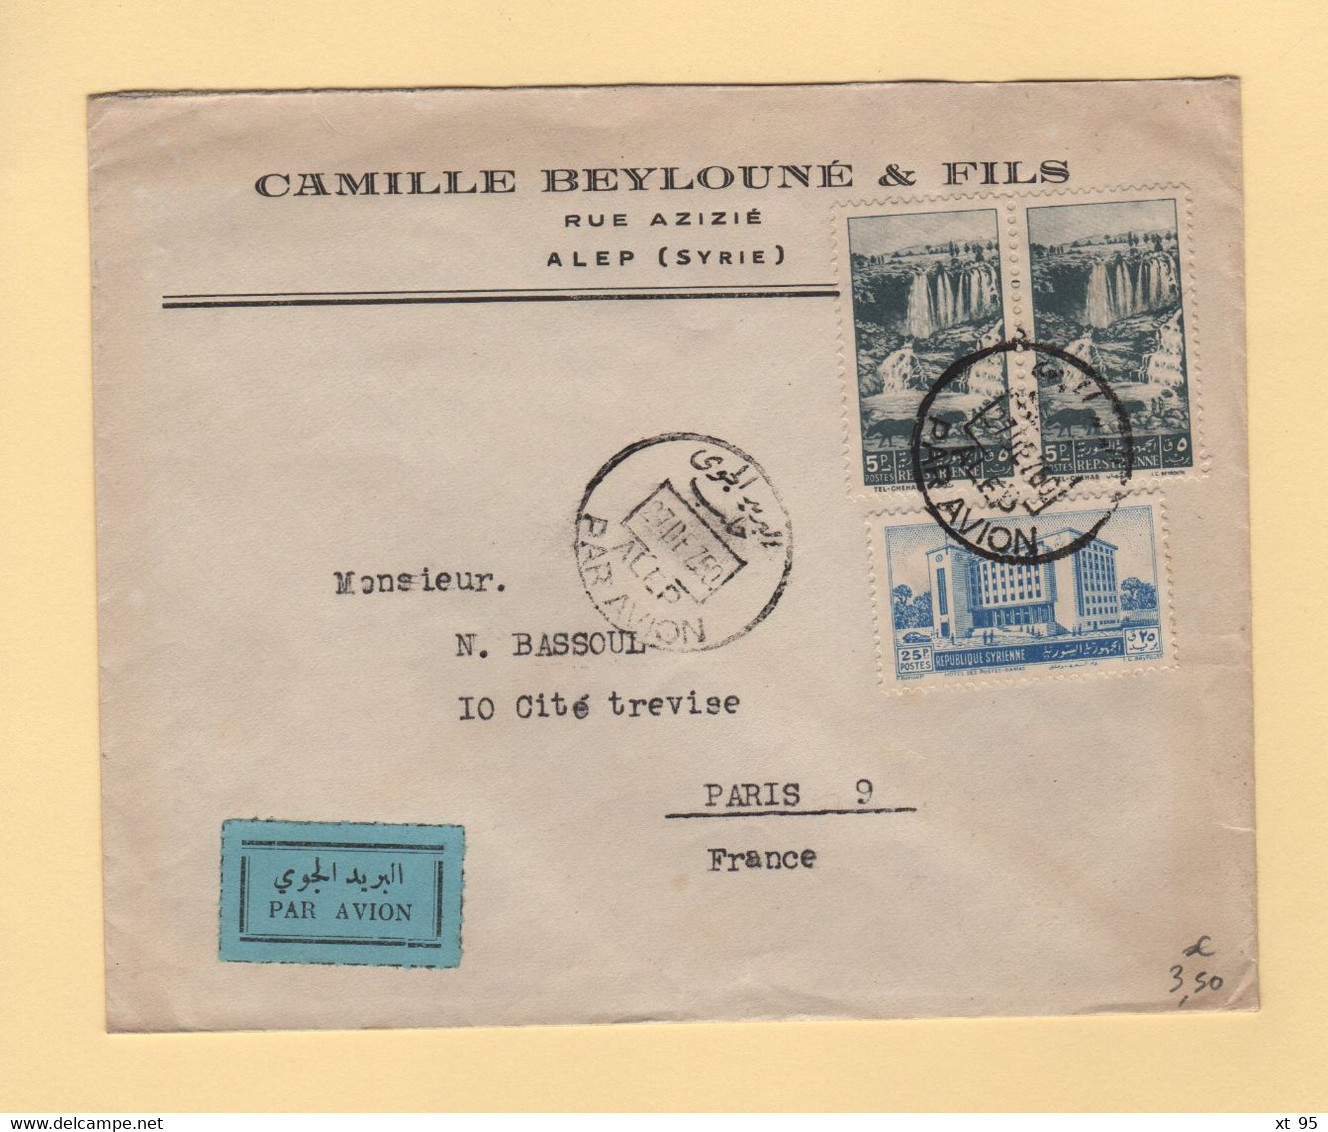 Syrie - Alep - 1950 - Par Avion Destination France - Syrie